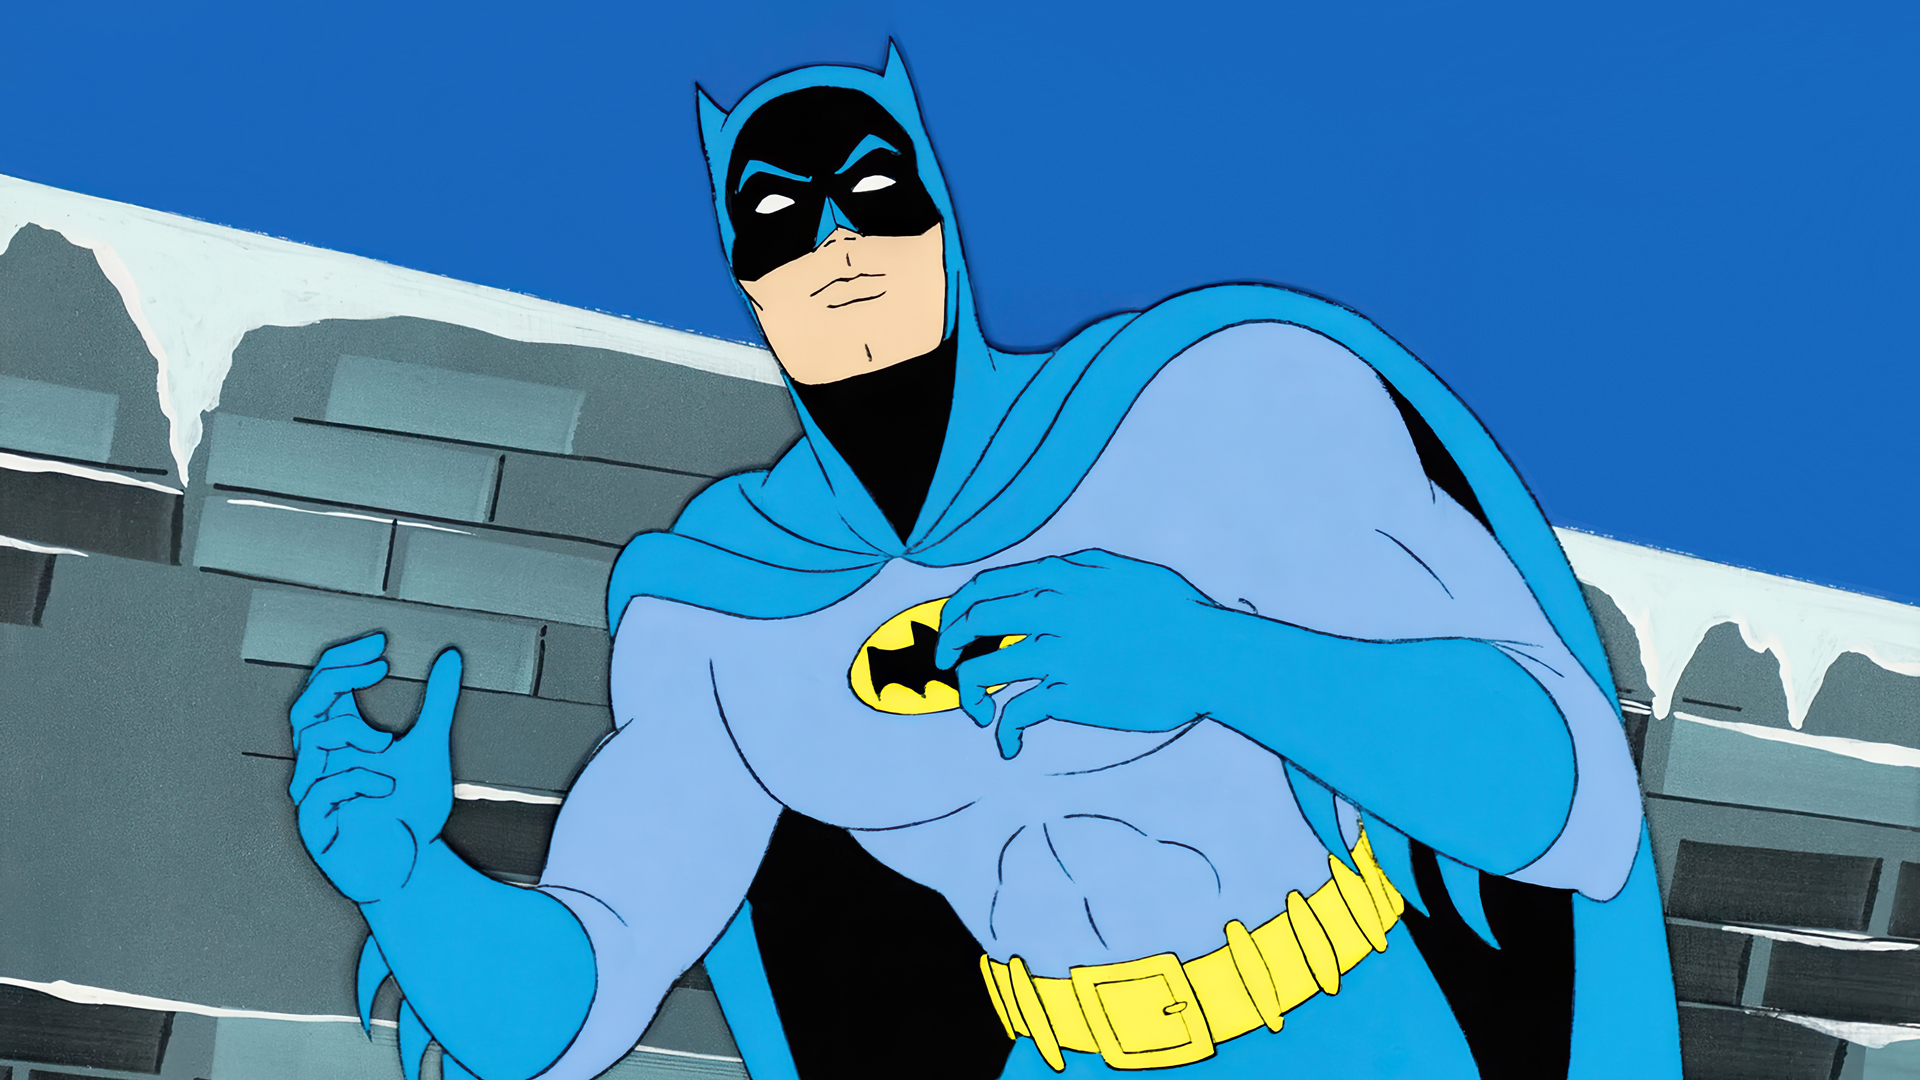 General 1920x1080 The Adventures of Batman animation animated series cartoon Batman cape superhero